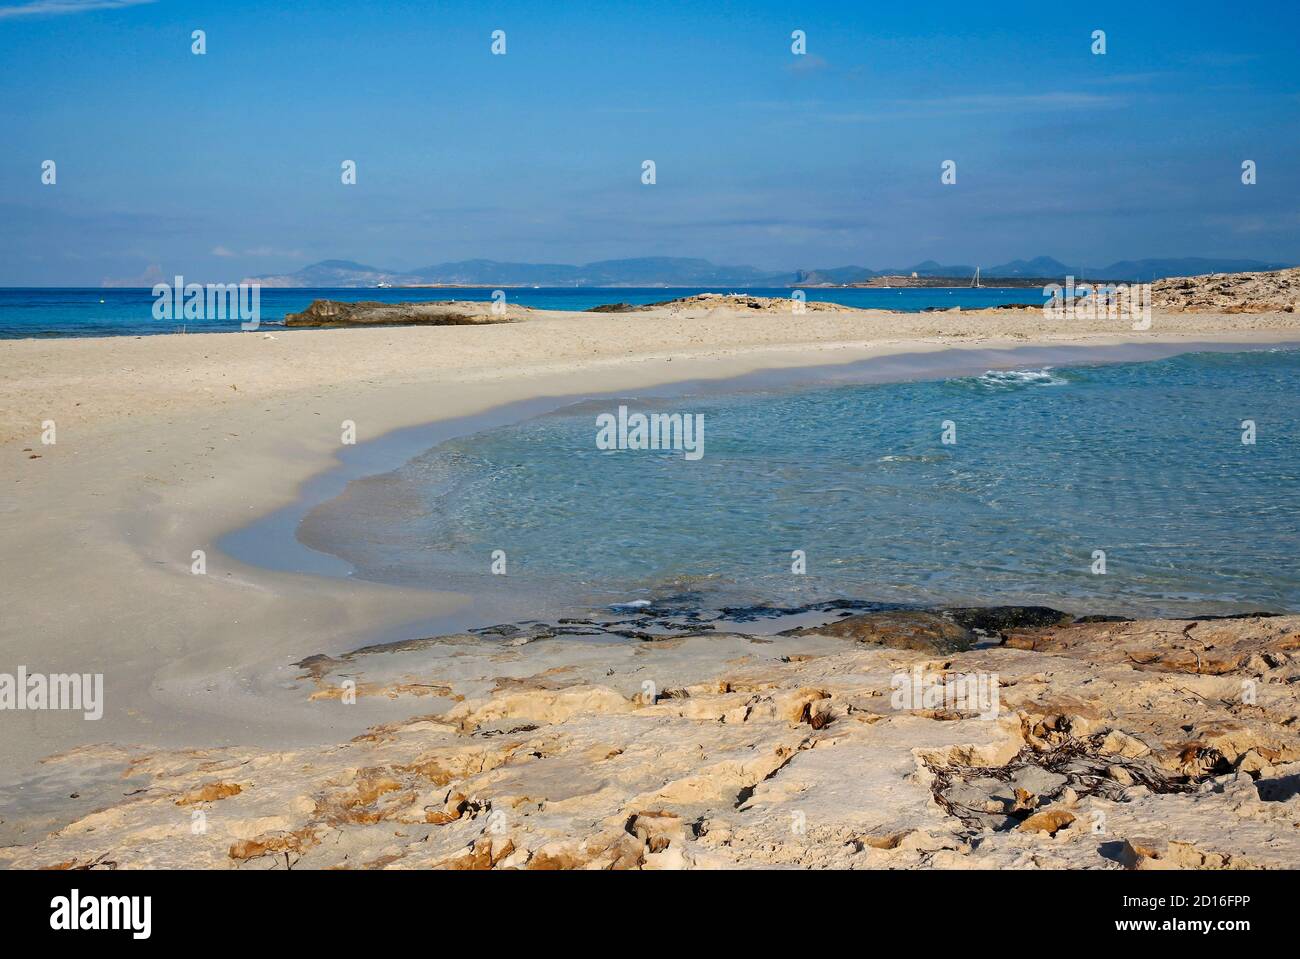 Spain, Balearic islands, formentera, platja de ses illetes, virgin fine sandy beach bathed in clear water Stock Photo